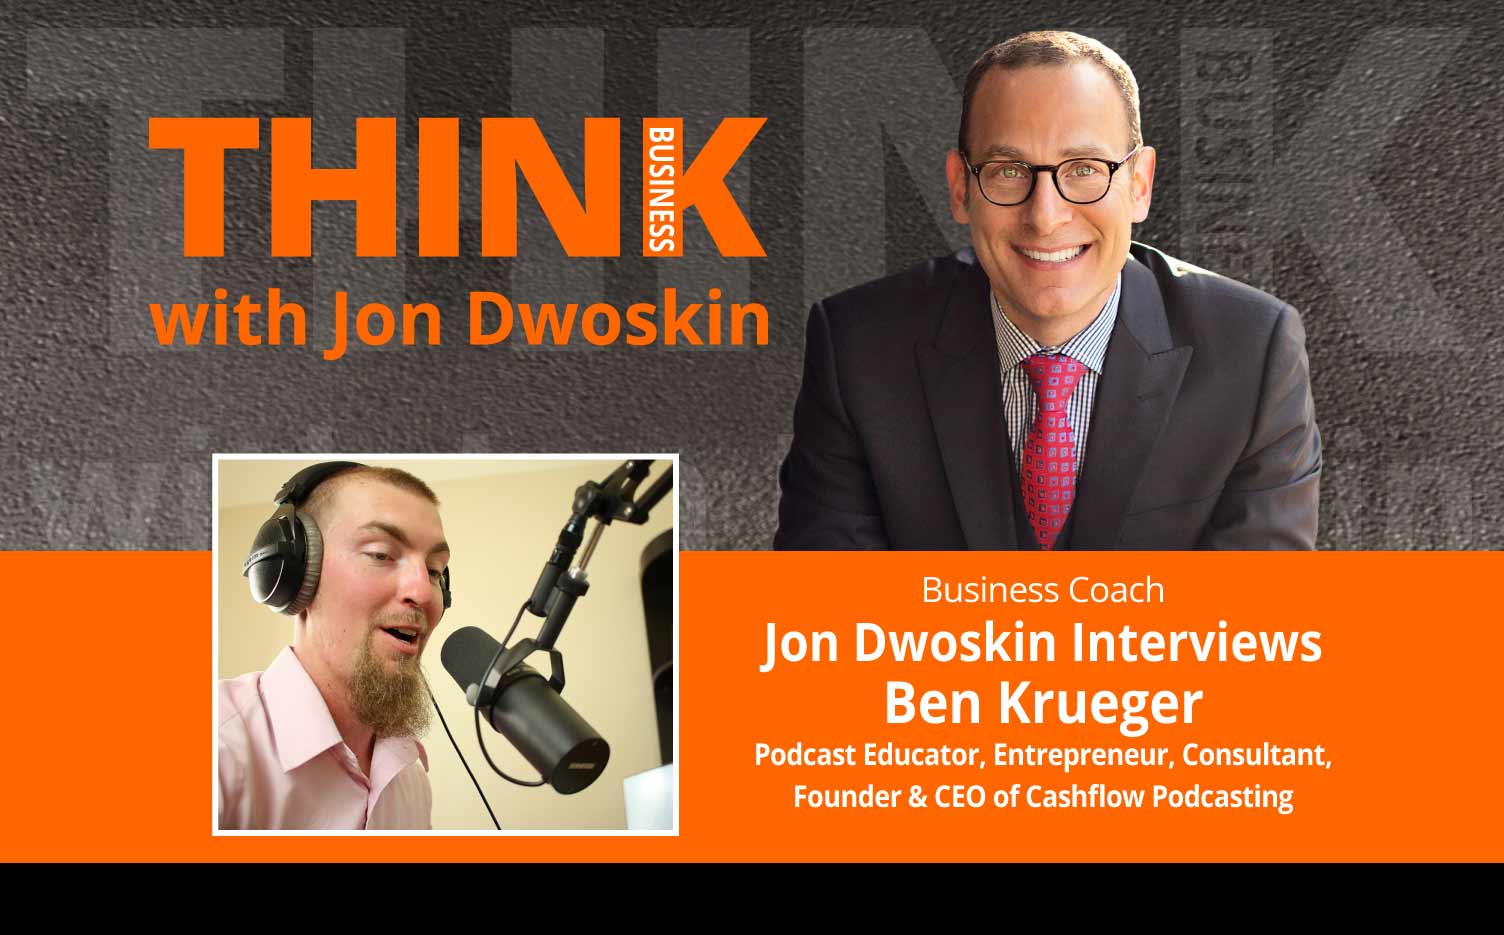 THINK Business Podcast: Jon Dwoskin Interviews Ben Krueger, Podcast Educator, Entrepreneur, Consultant, Founder & CEO of Cashflow Podcasting